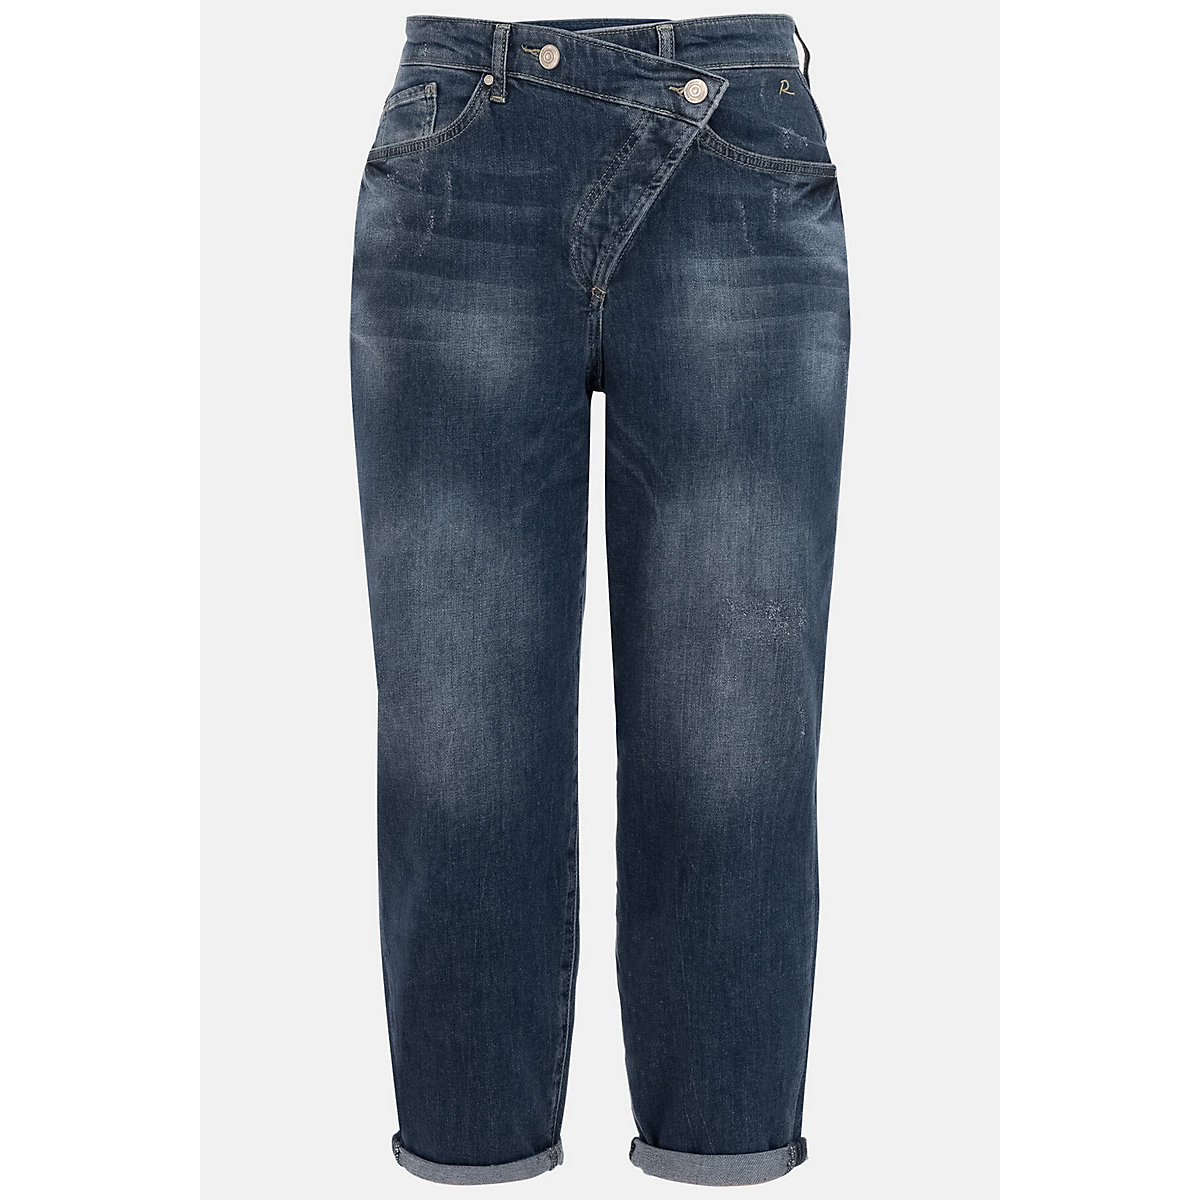 RECOVER pants Jeans dunkelblau